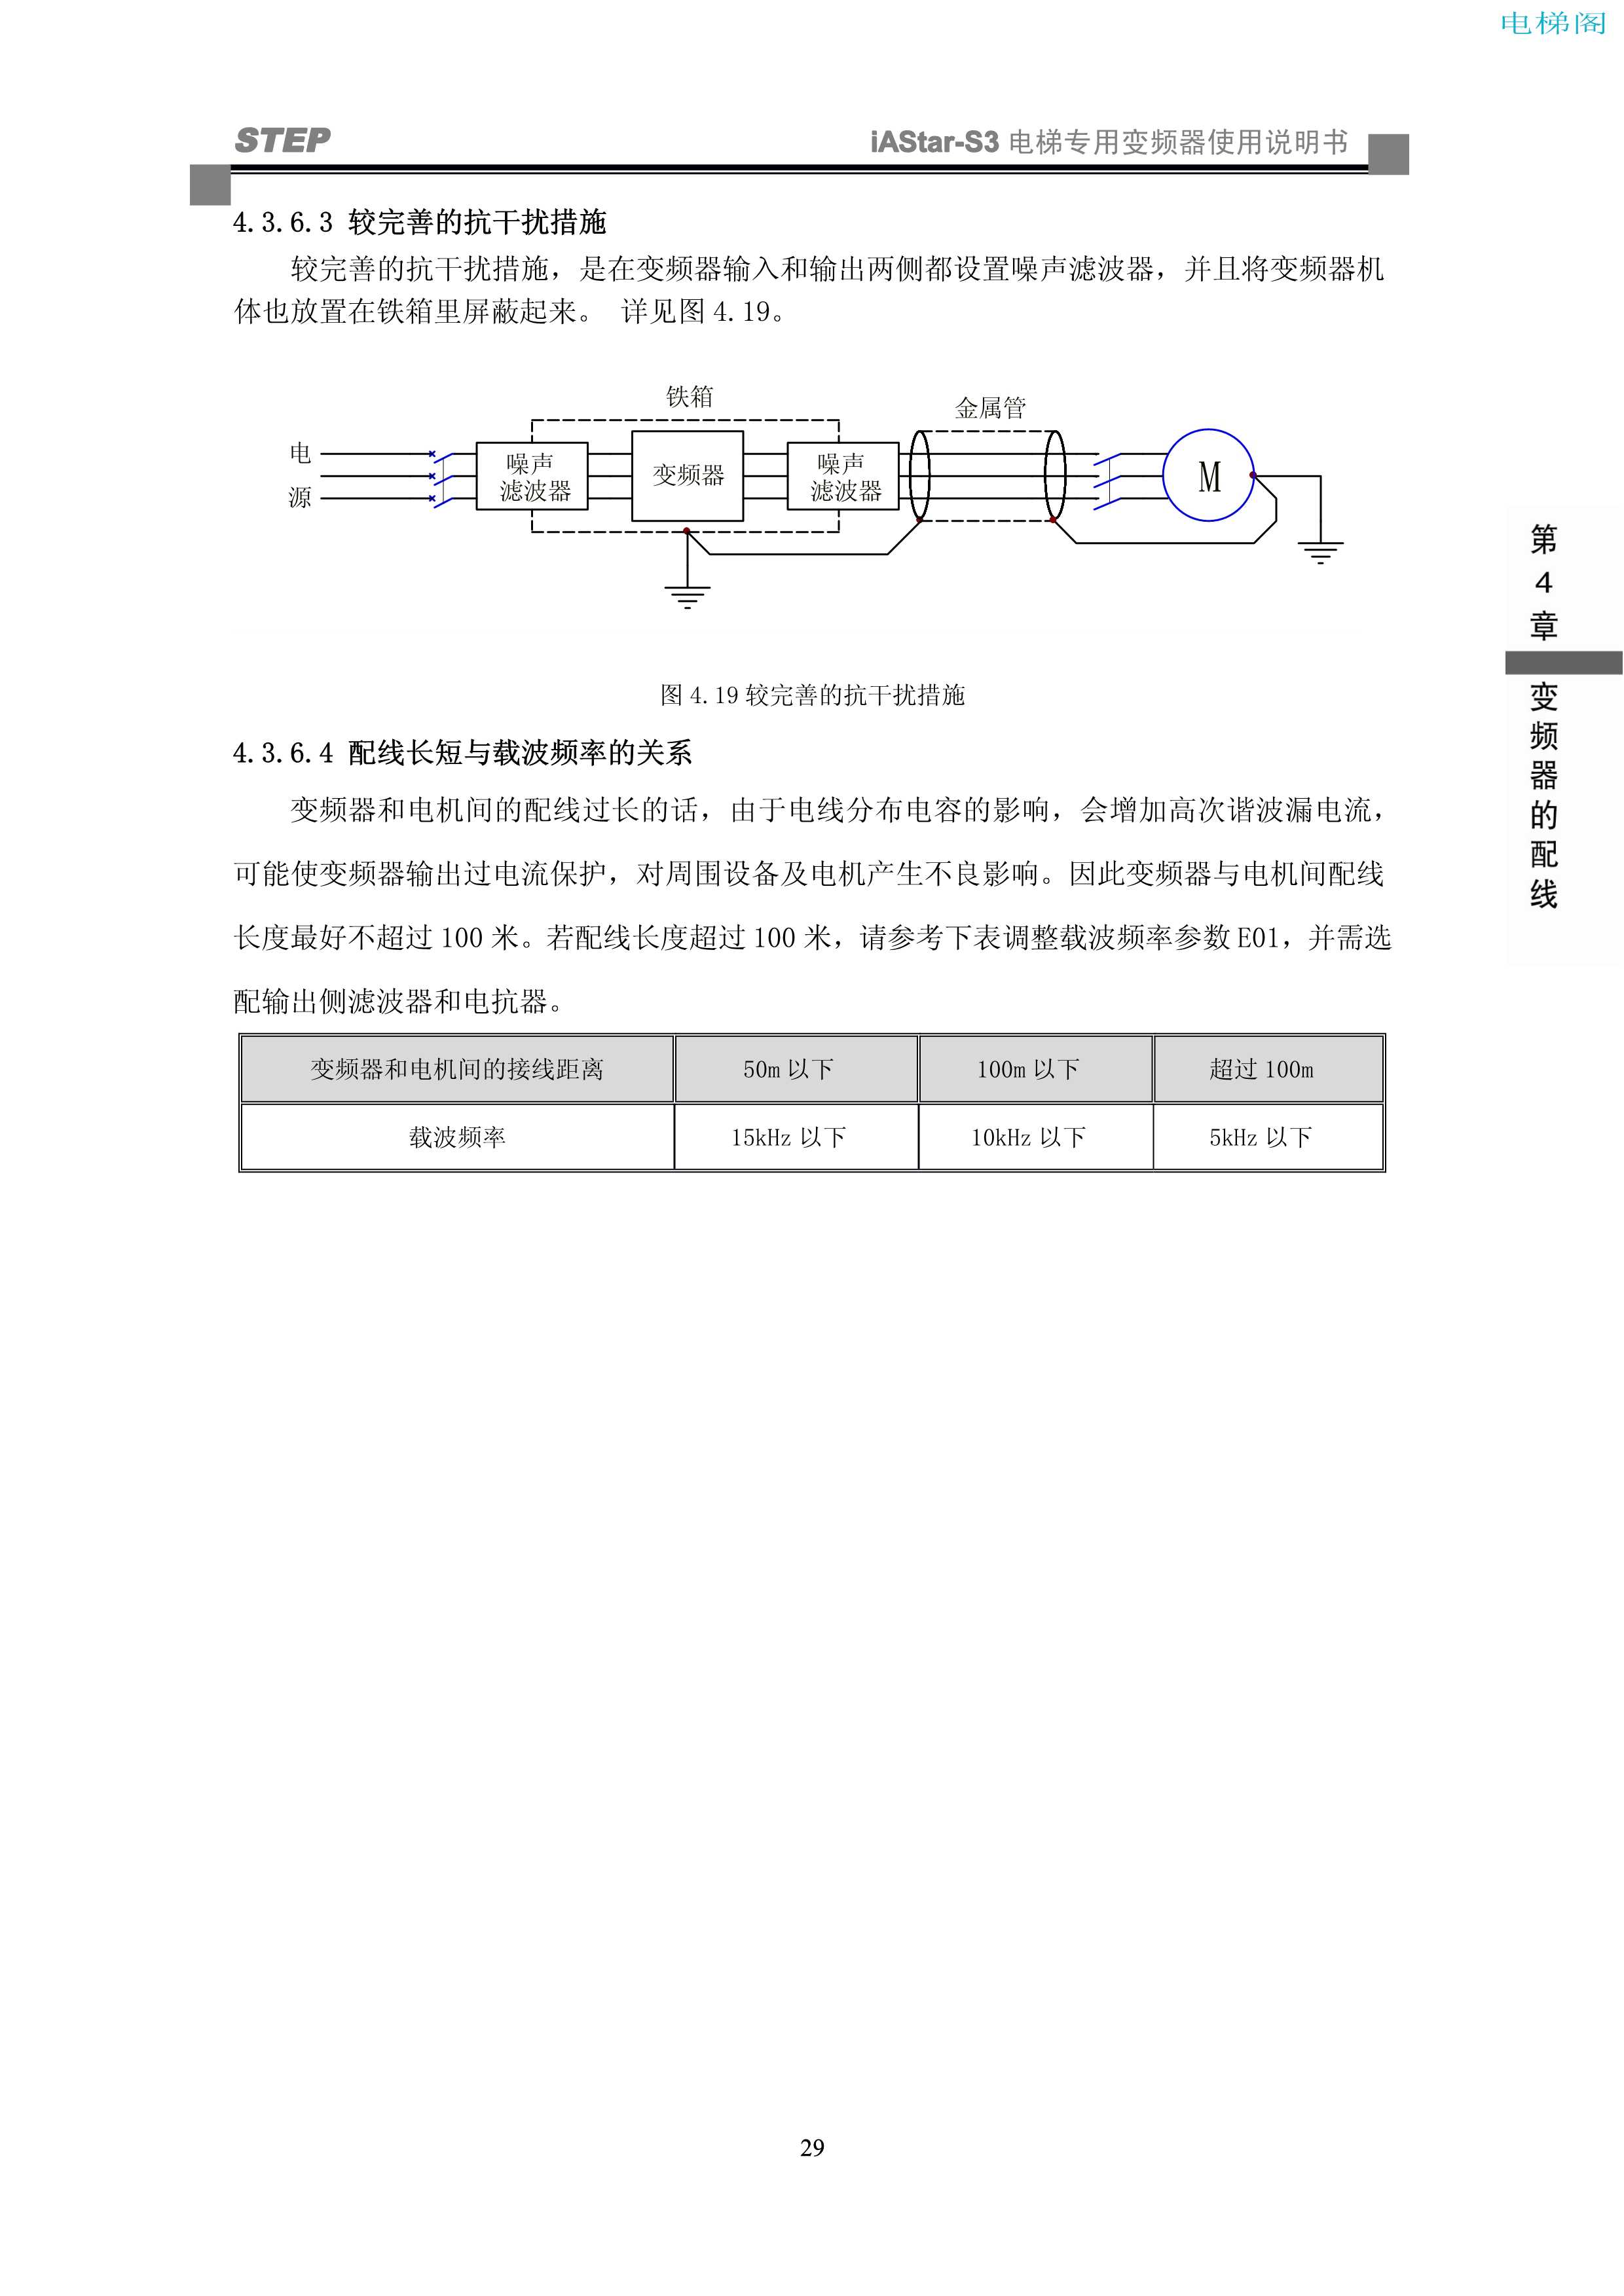 iAStar-S3系列电梯专用变频器使用说明书-9(V2[1].03)_37.jpg